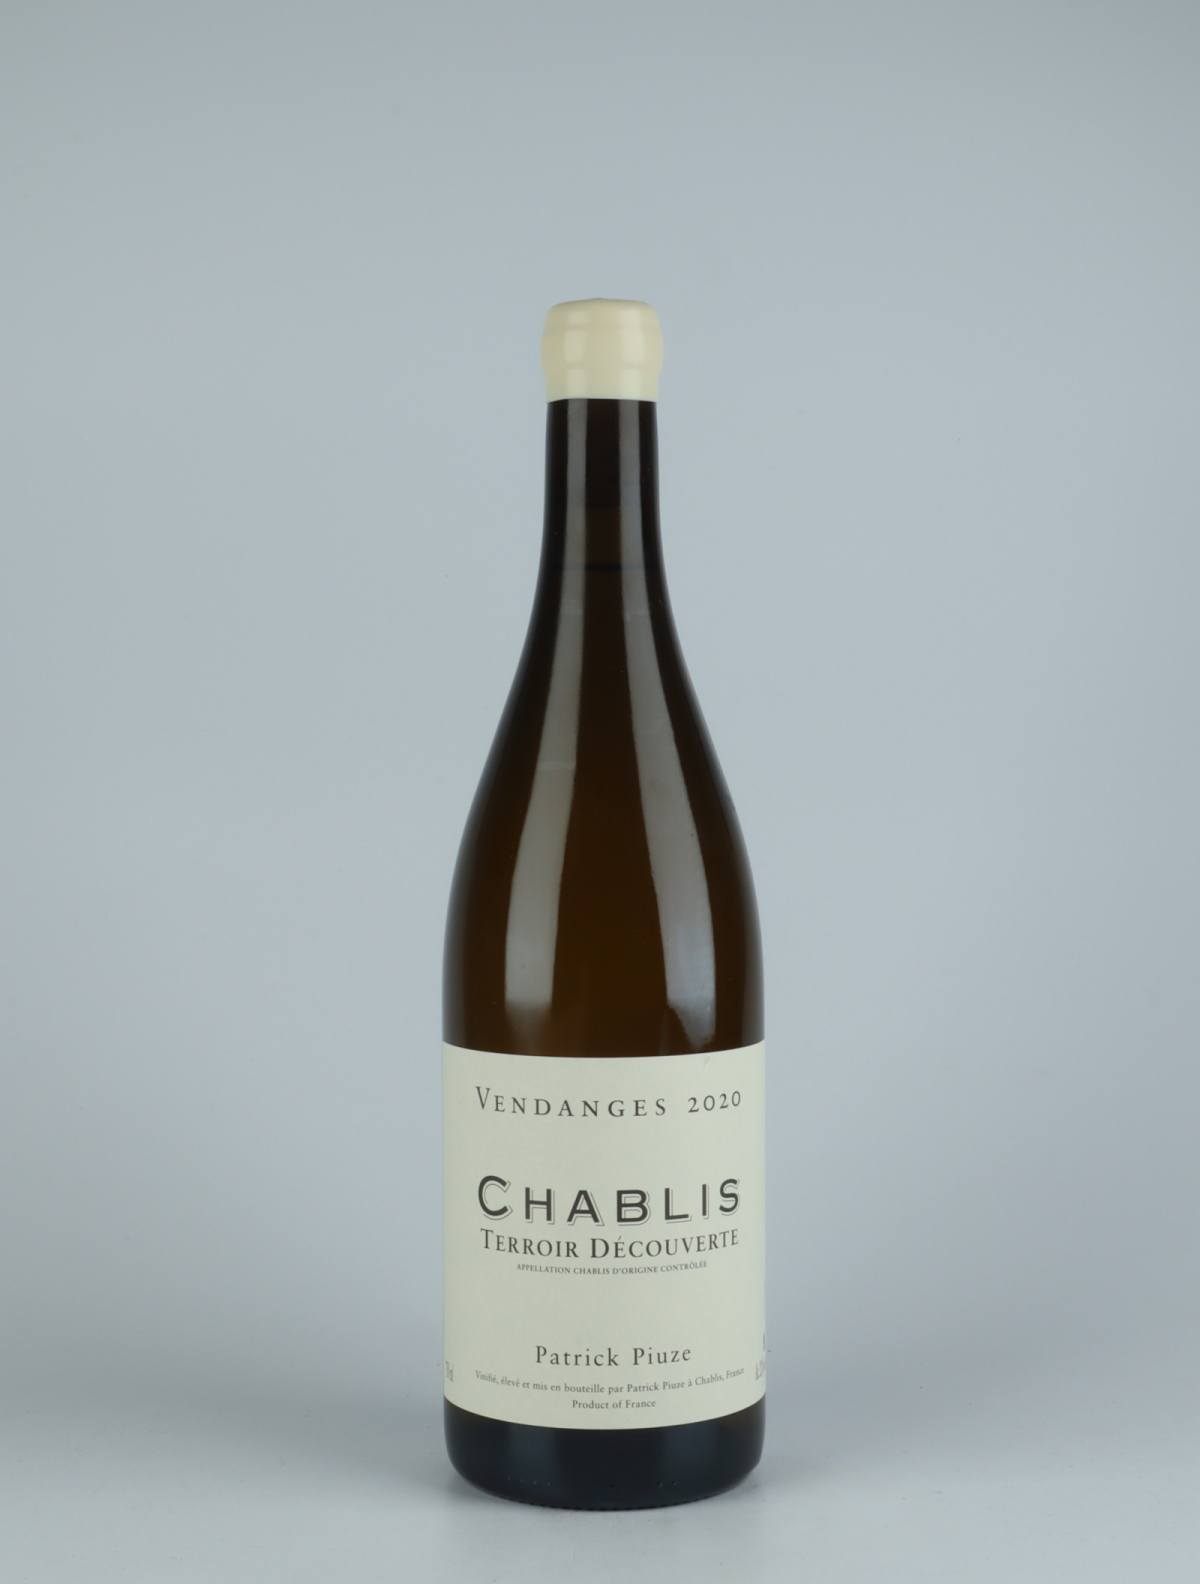 A bottle 2020 Chablis - Terroir Découverte White wine from Patrick Piuze, Burgundy in France